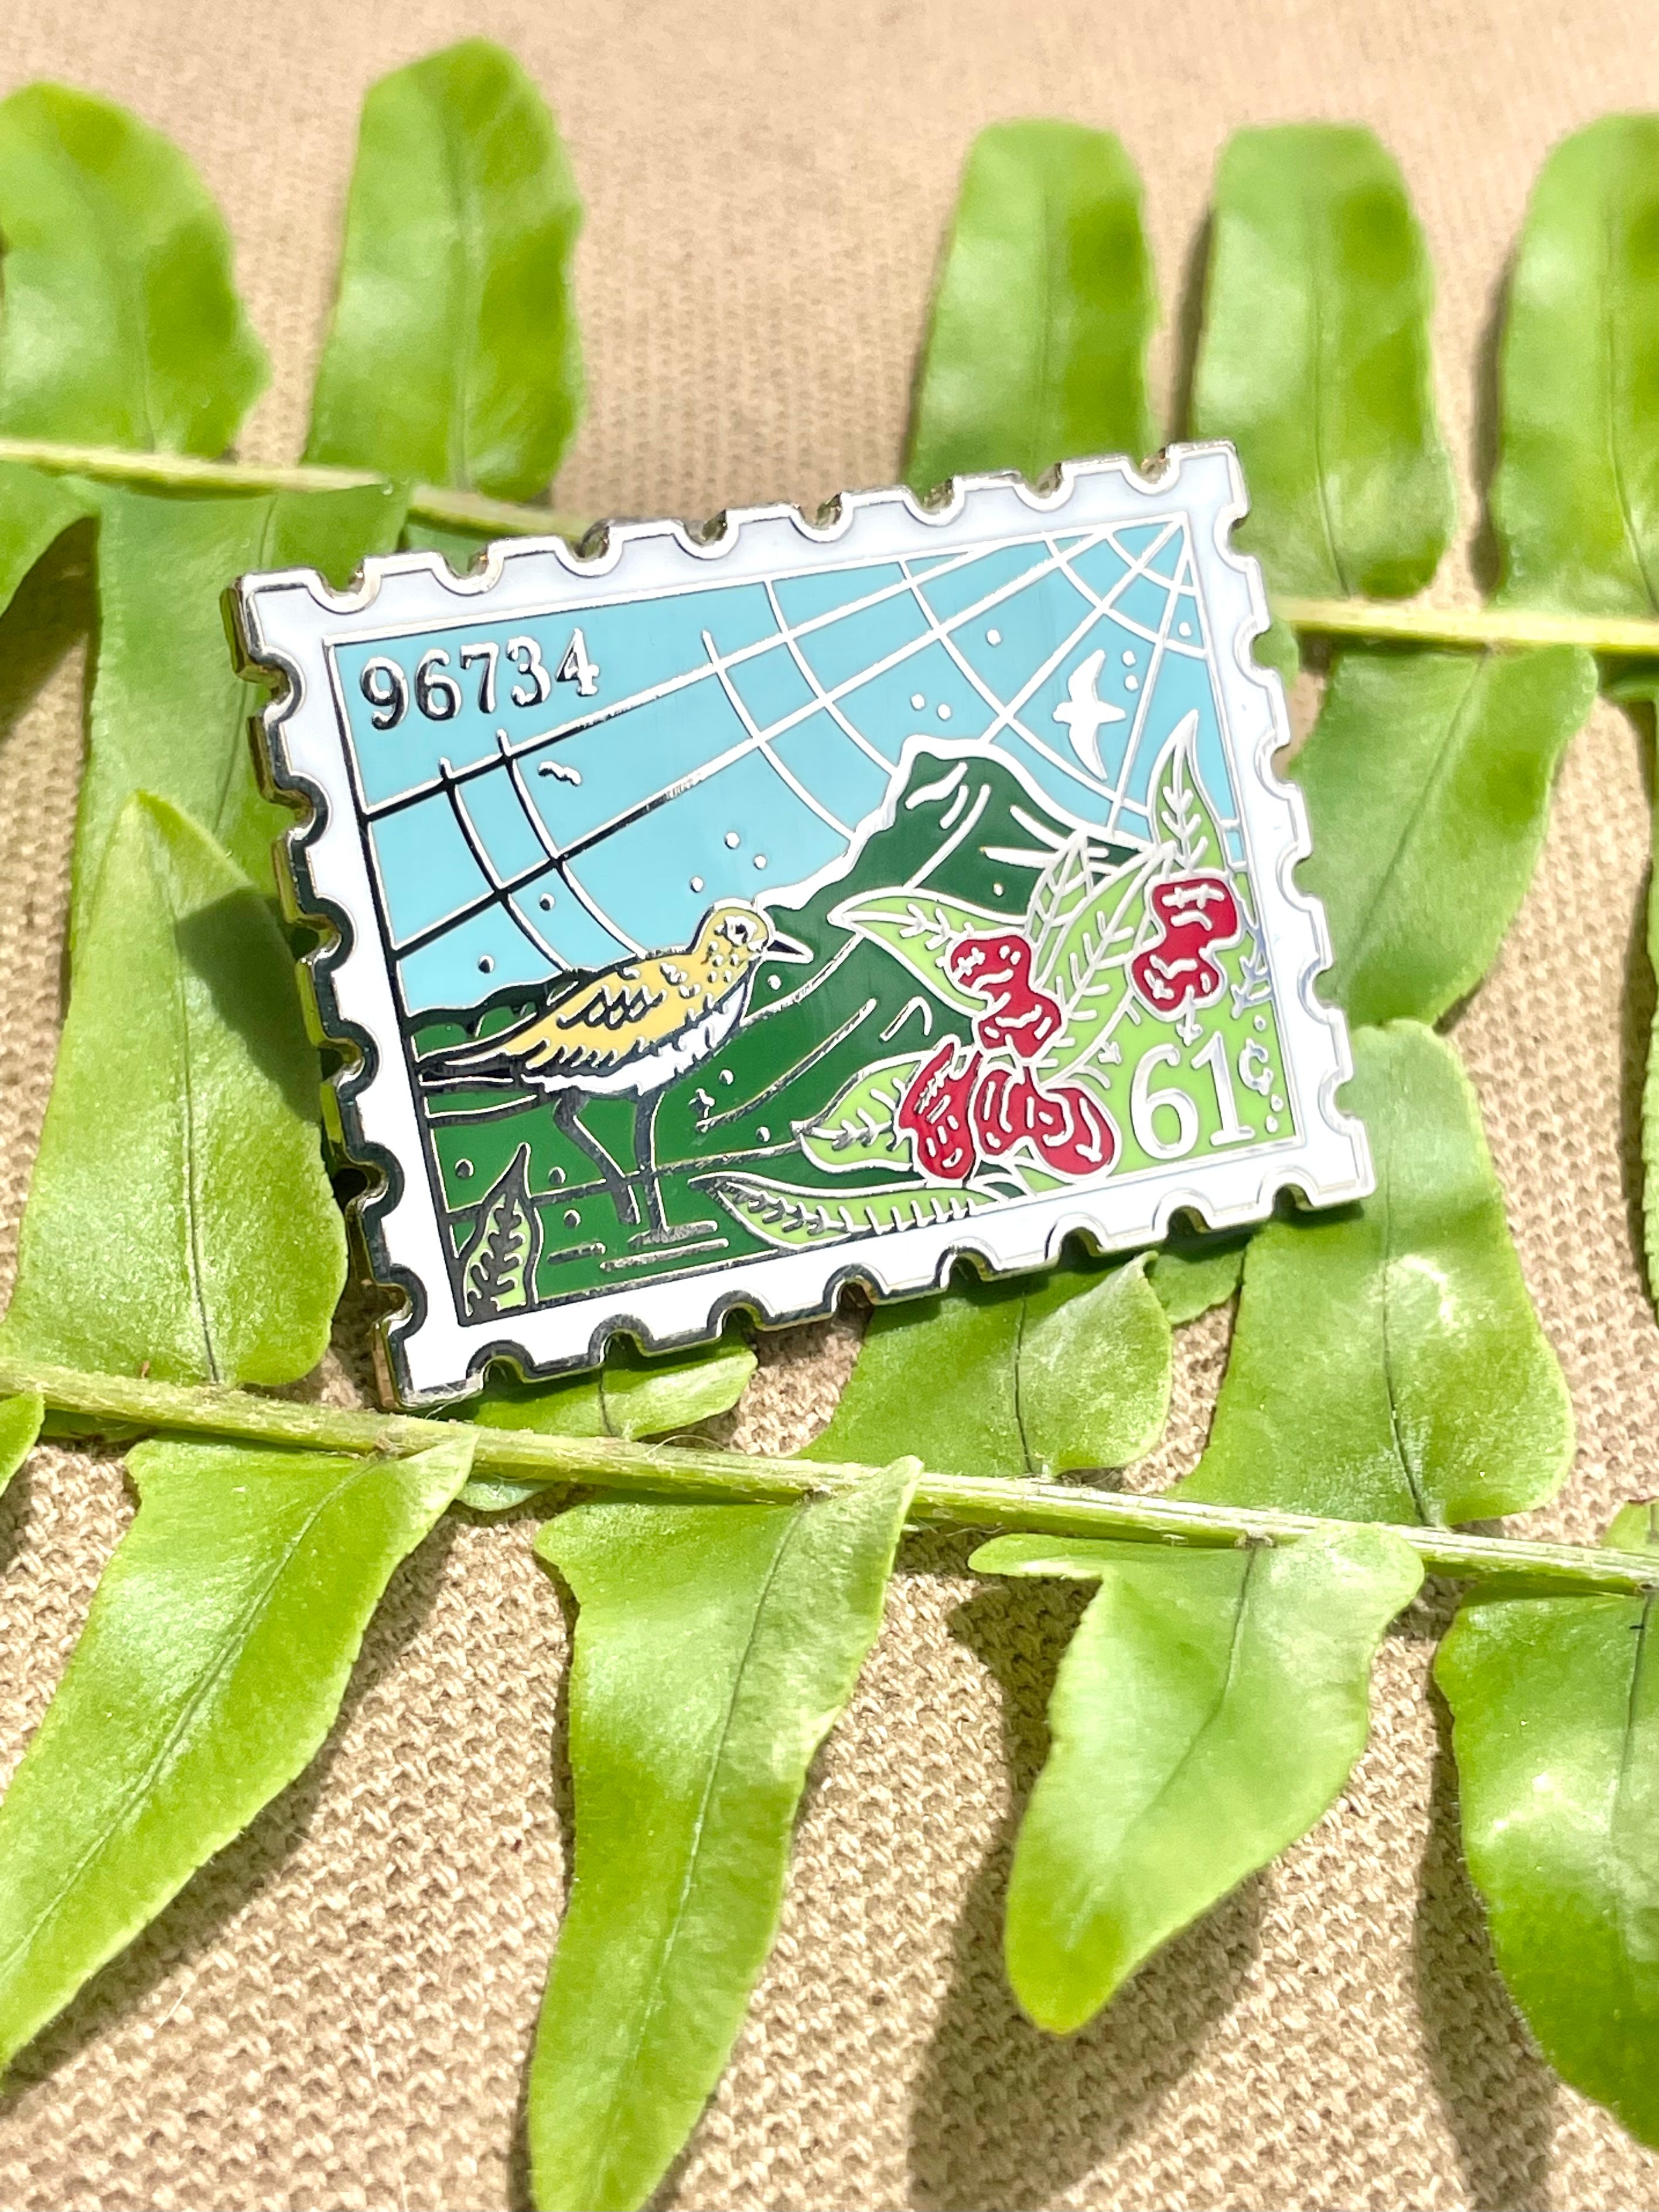 SECONDS ✷ Kawainui Marsh Post Stamp Pin